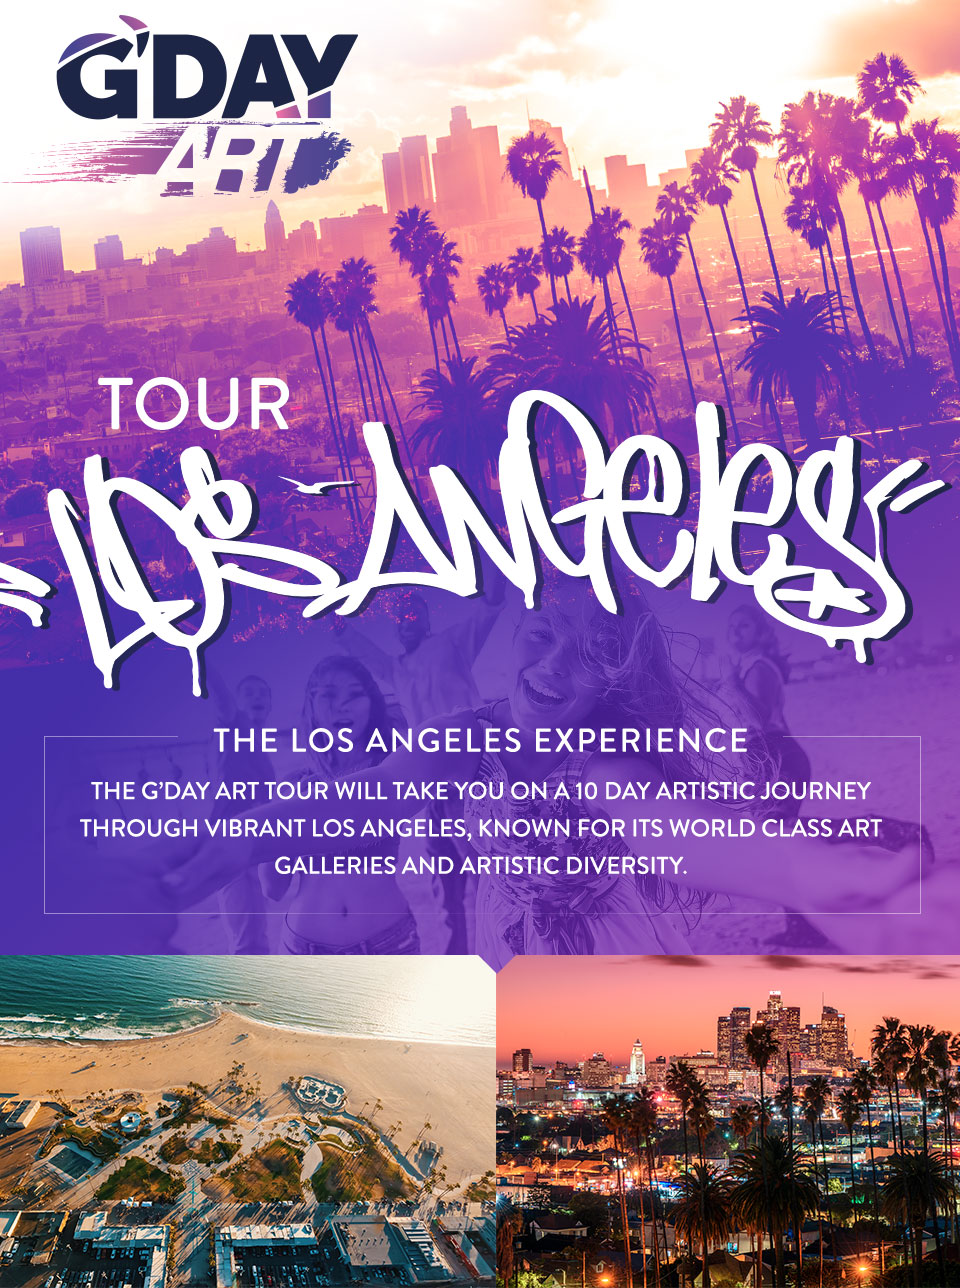 G'Day Art - Tour Los Angeles